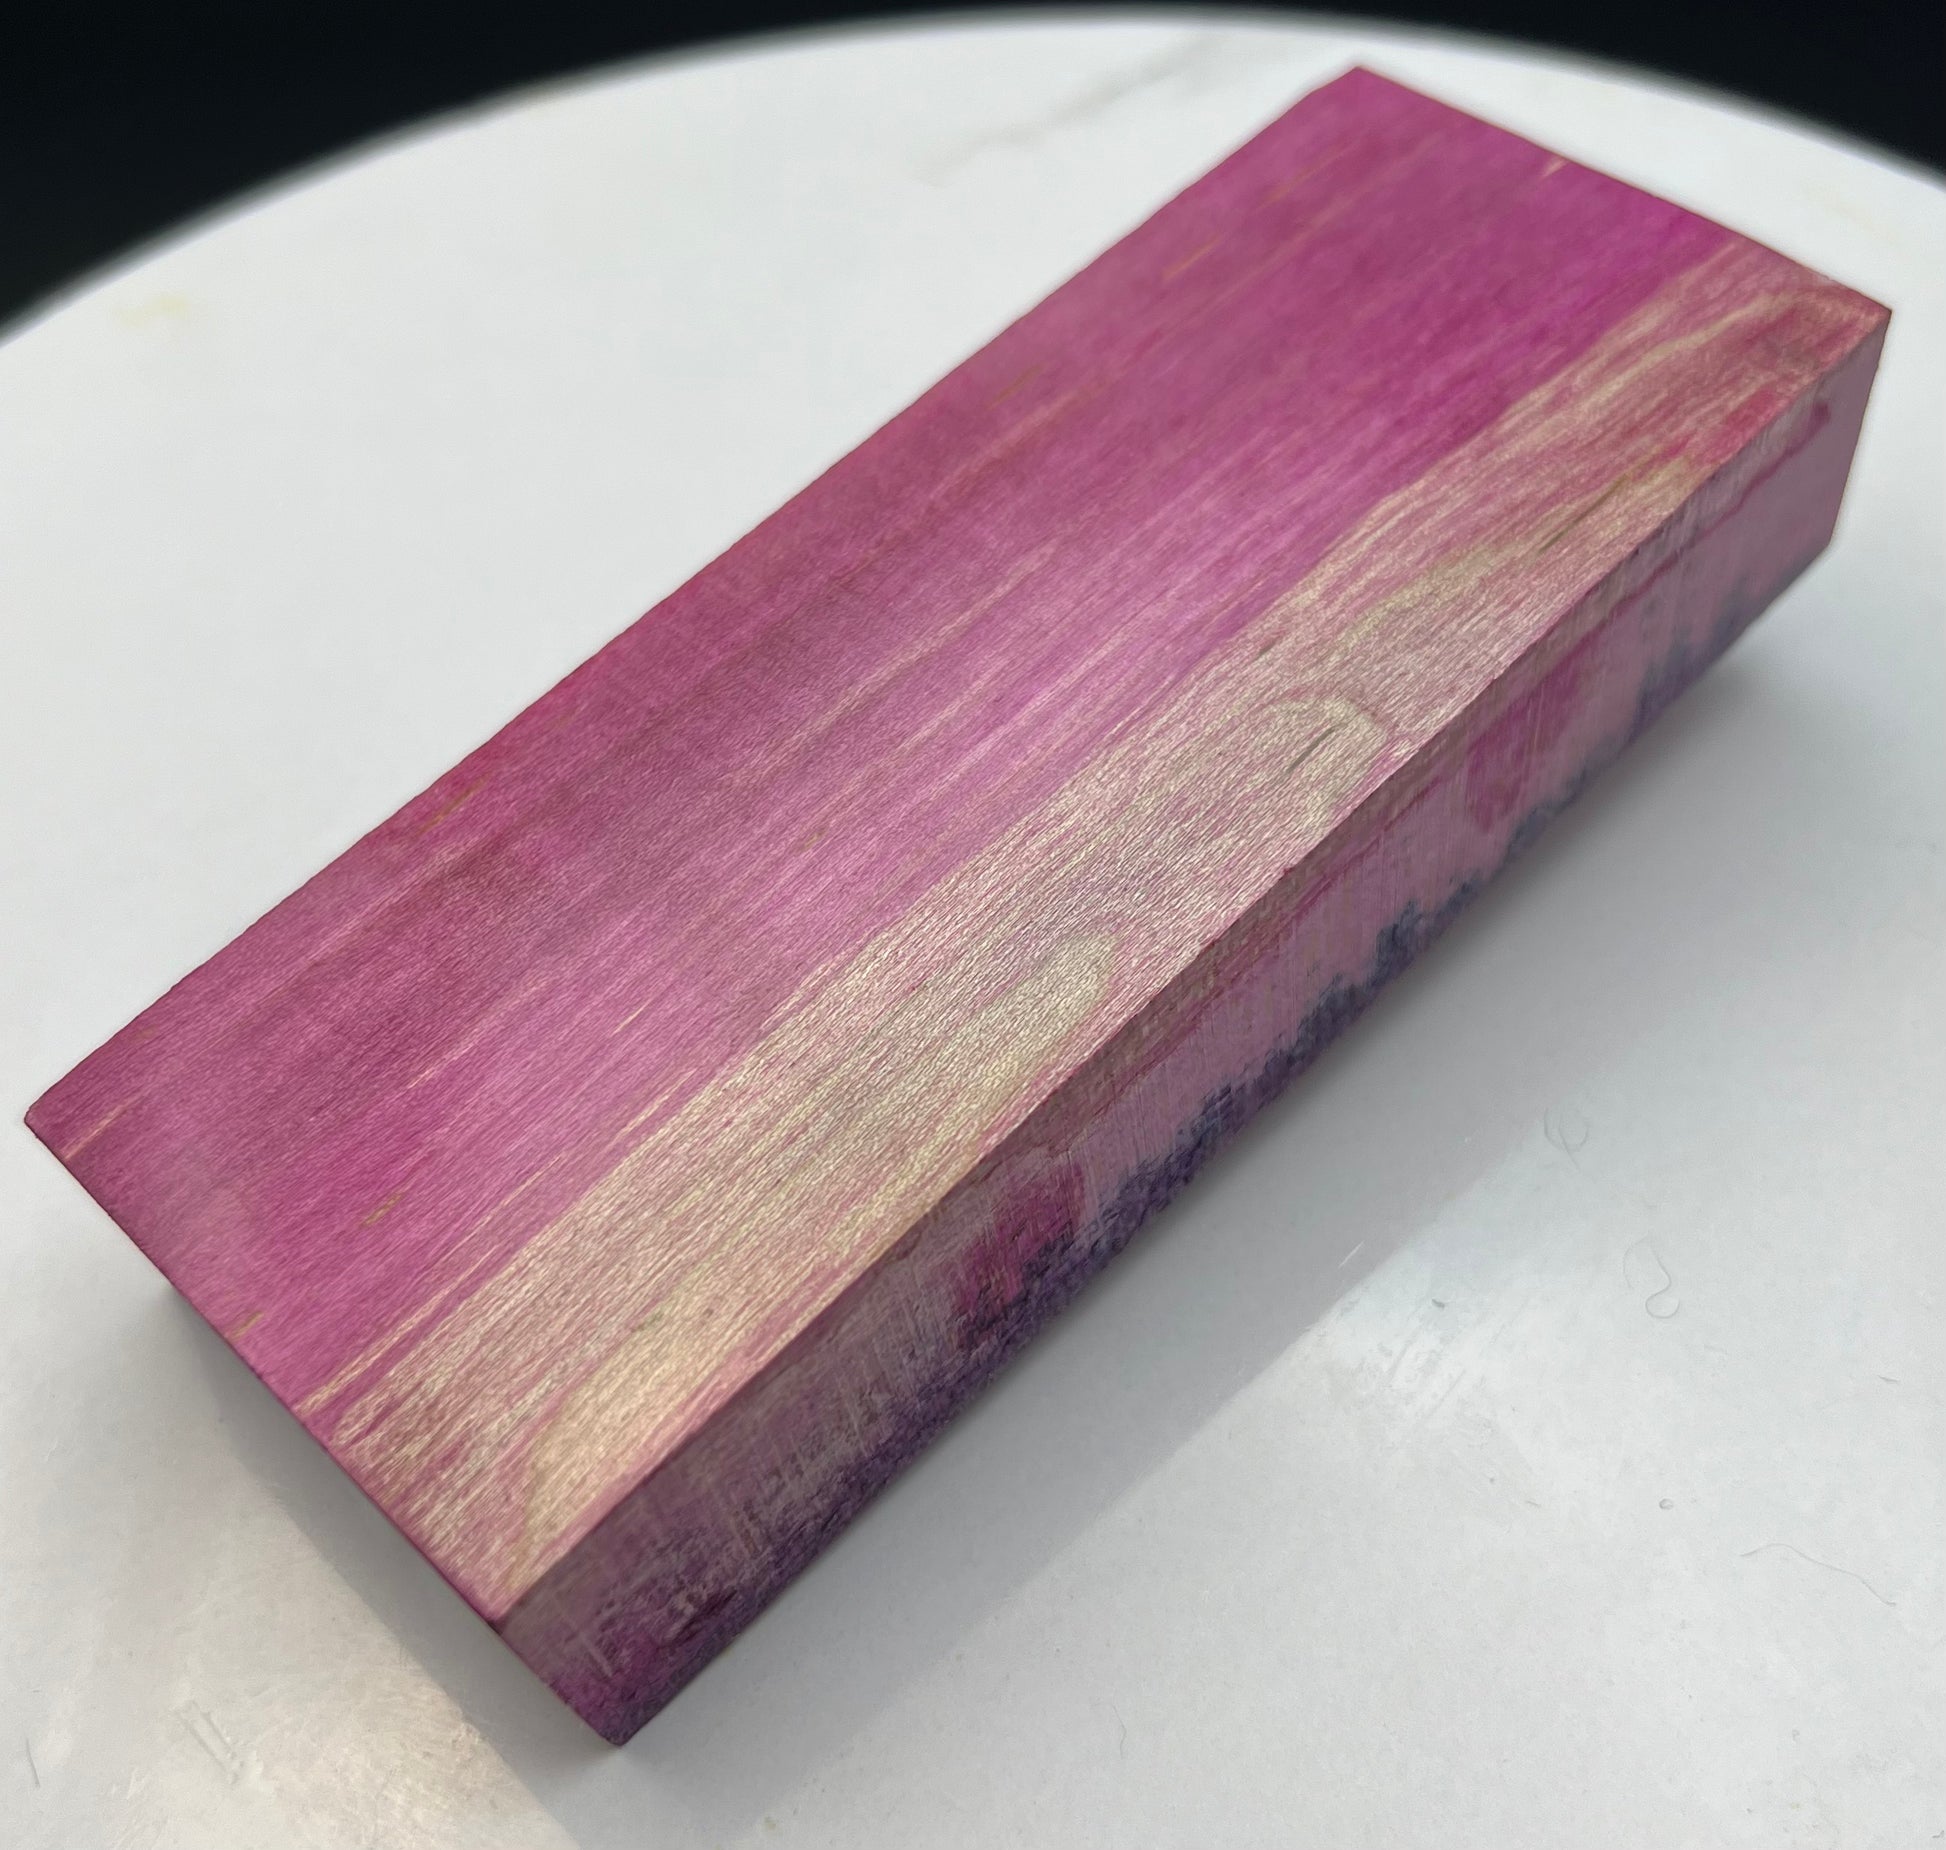  Stabilized Curly Maple Knife Block Light Purple